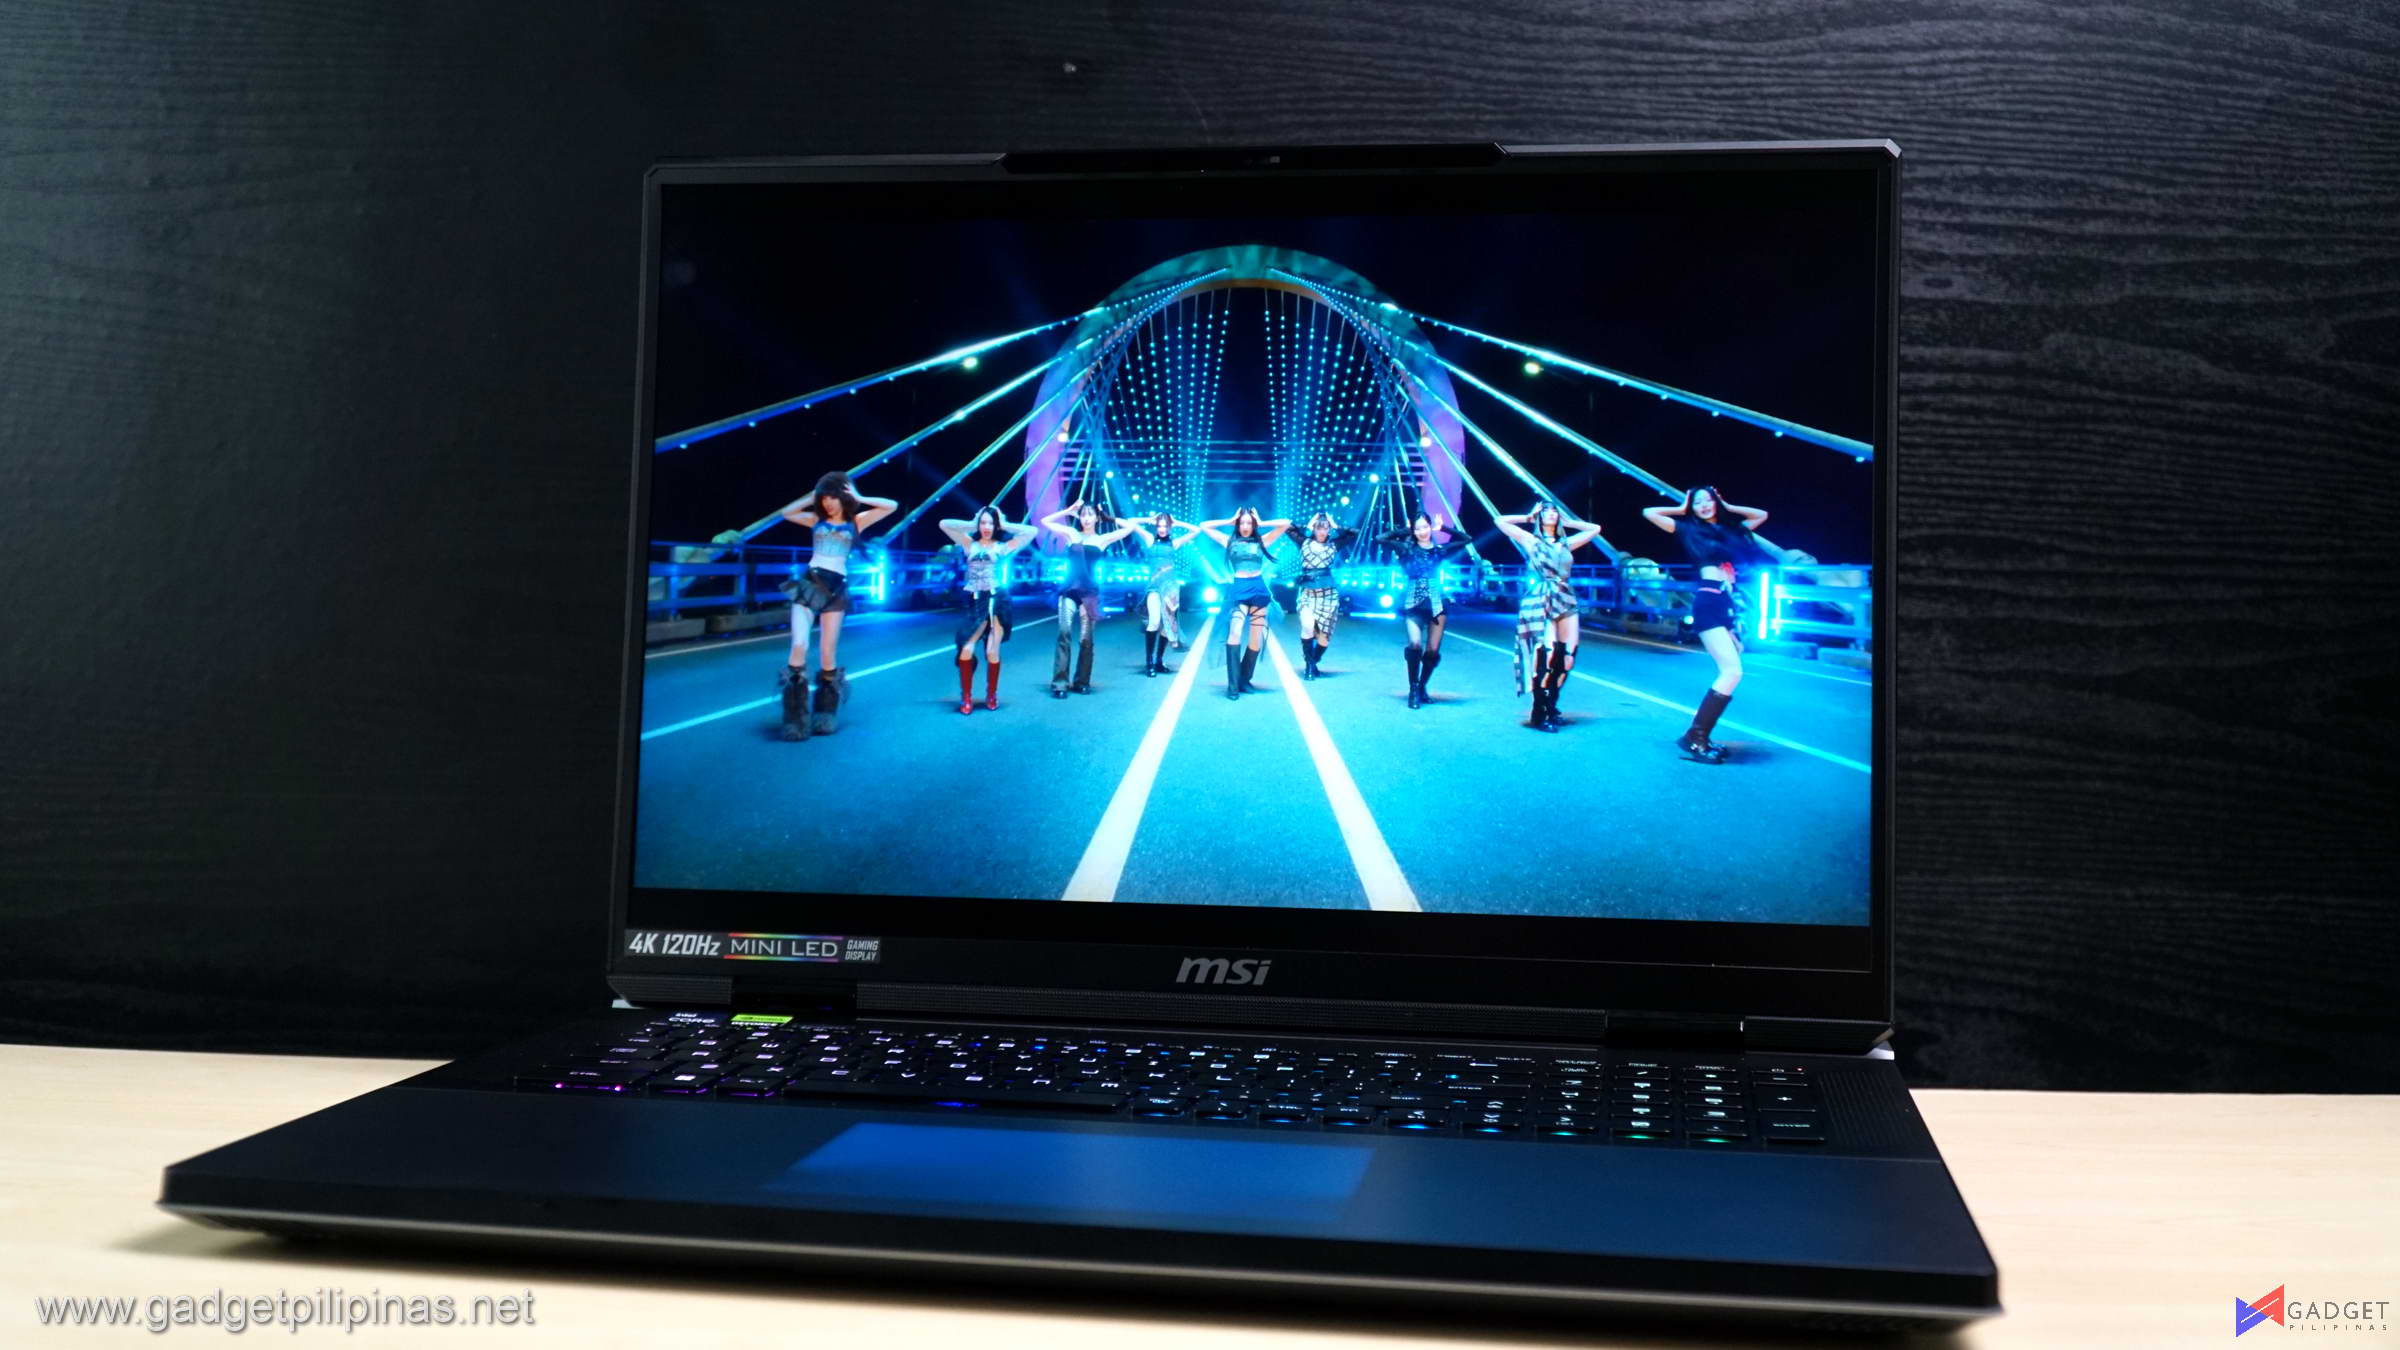 MSI TITAN 18 HX Gaming Laptop Review – Less Gimmick, More Gaming